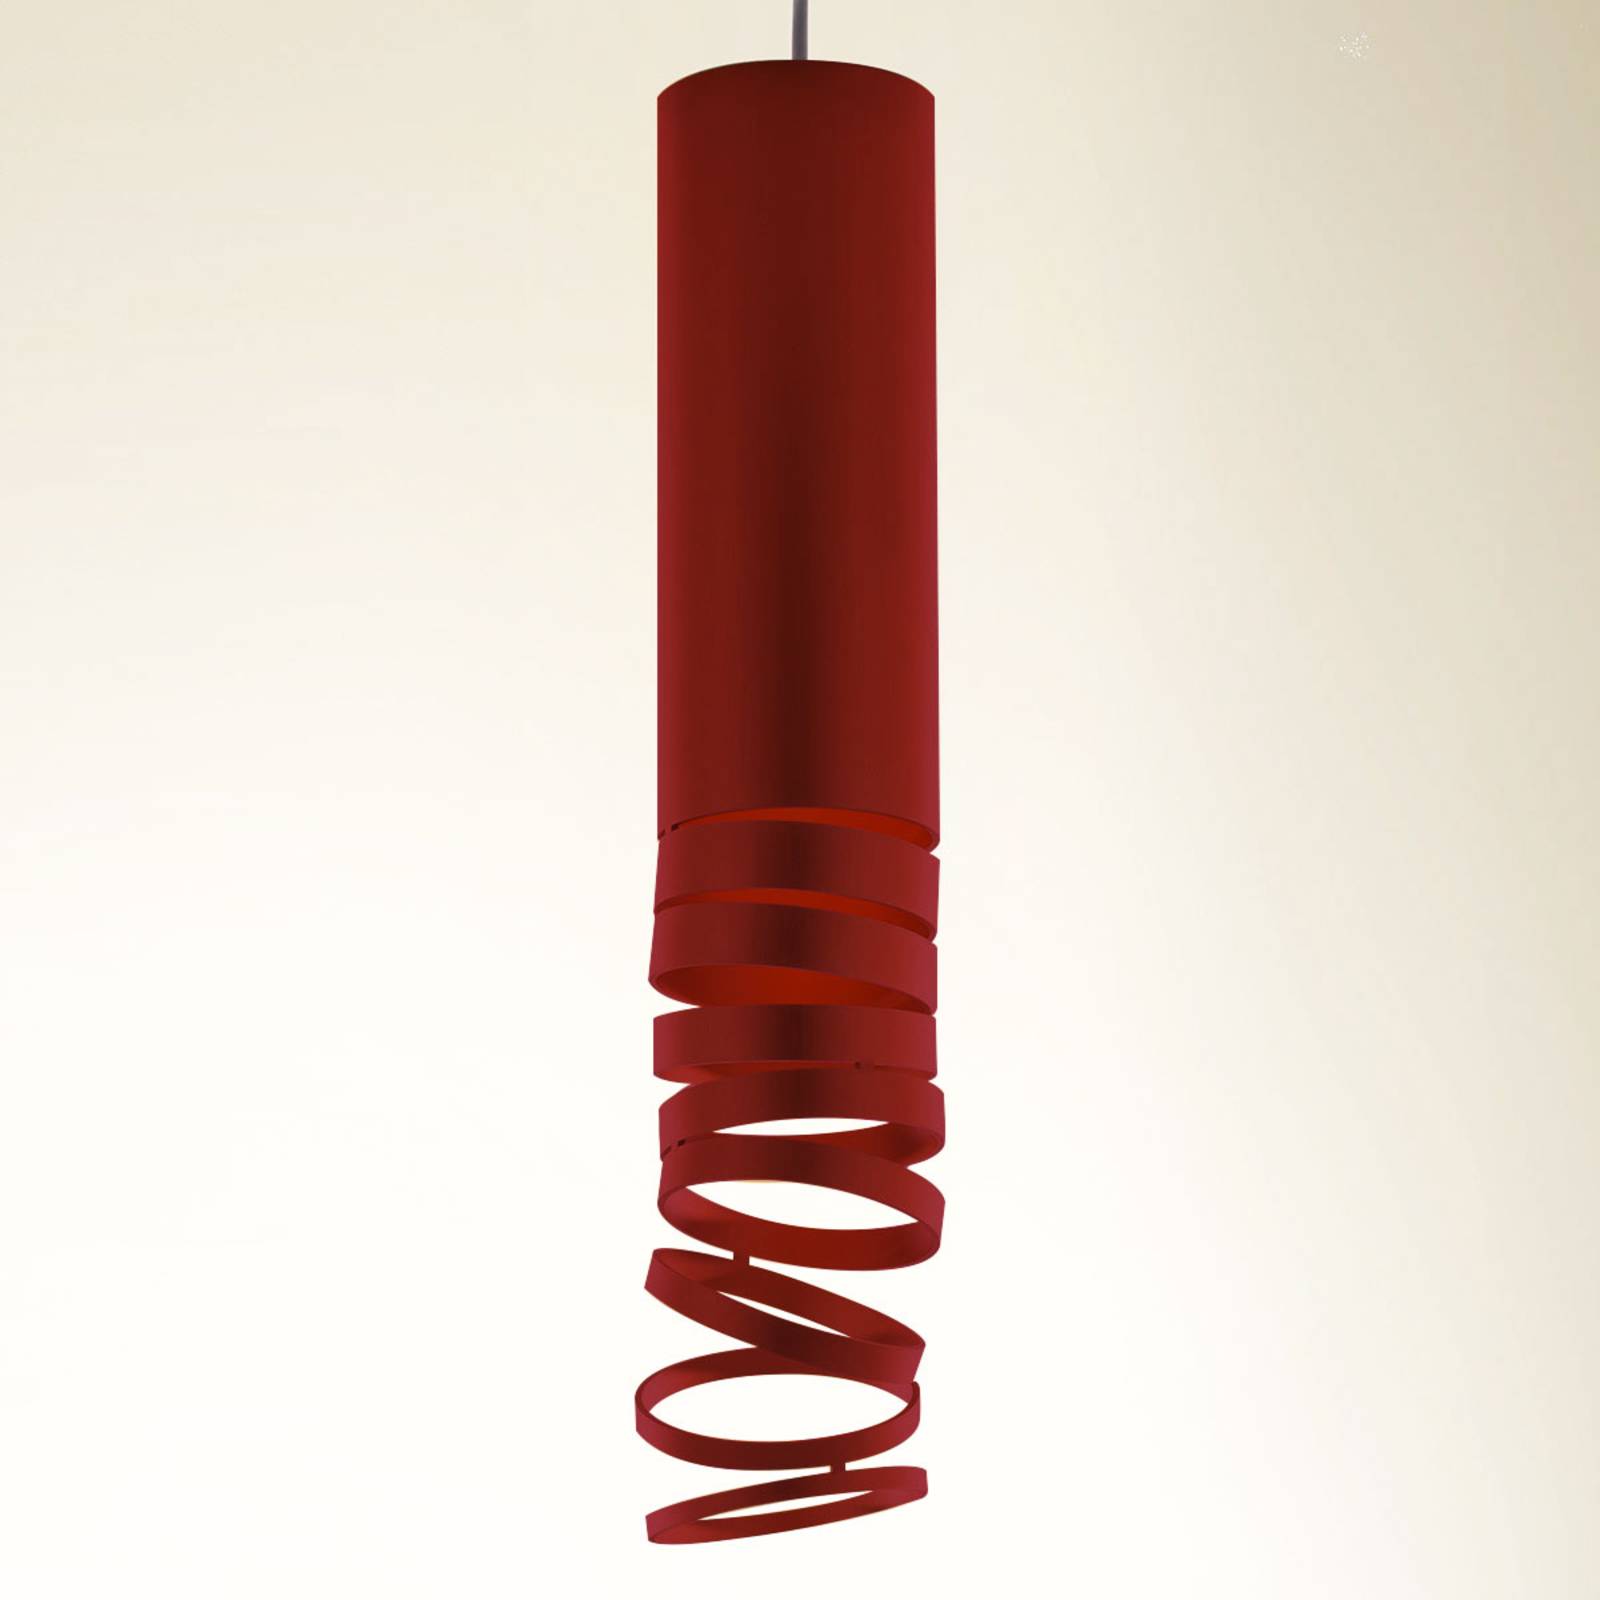 Artemide Decompos lampada a sospensione rossa